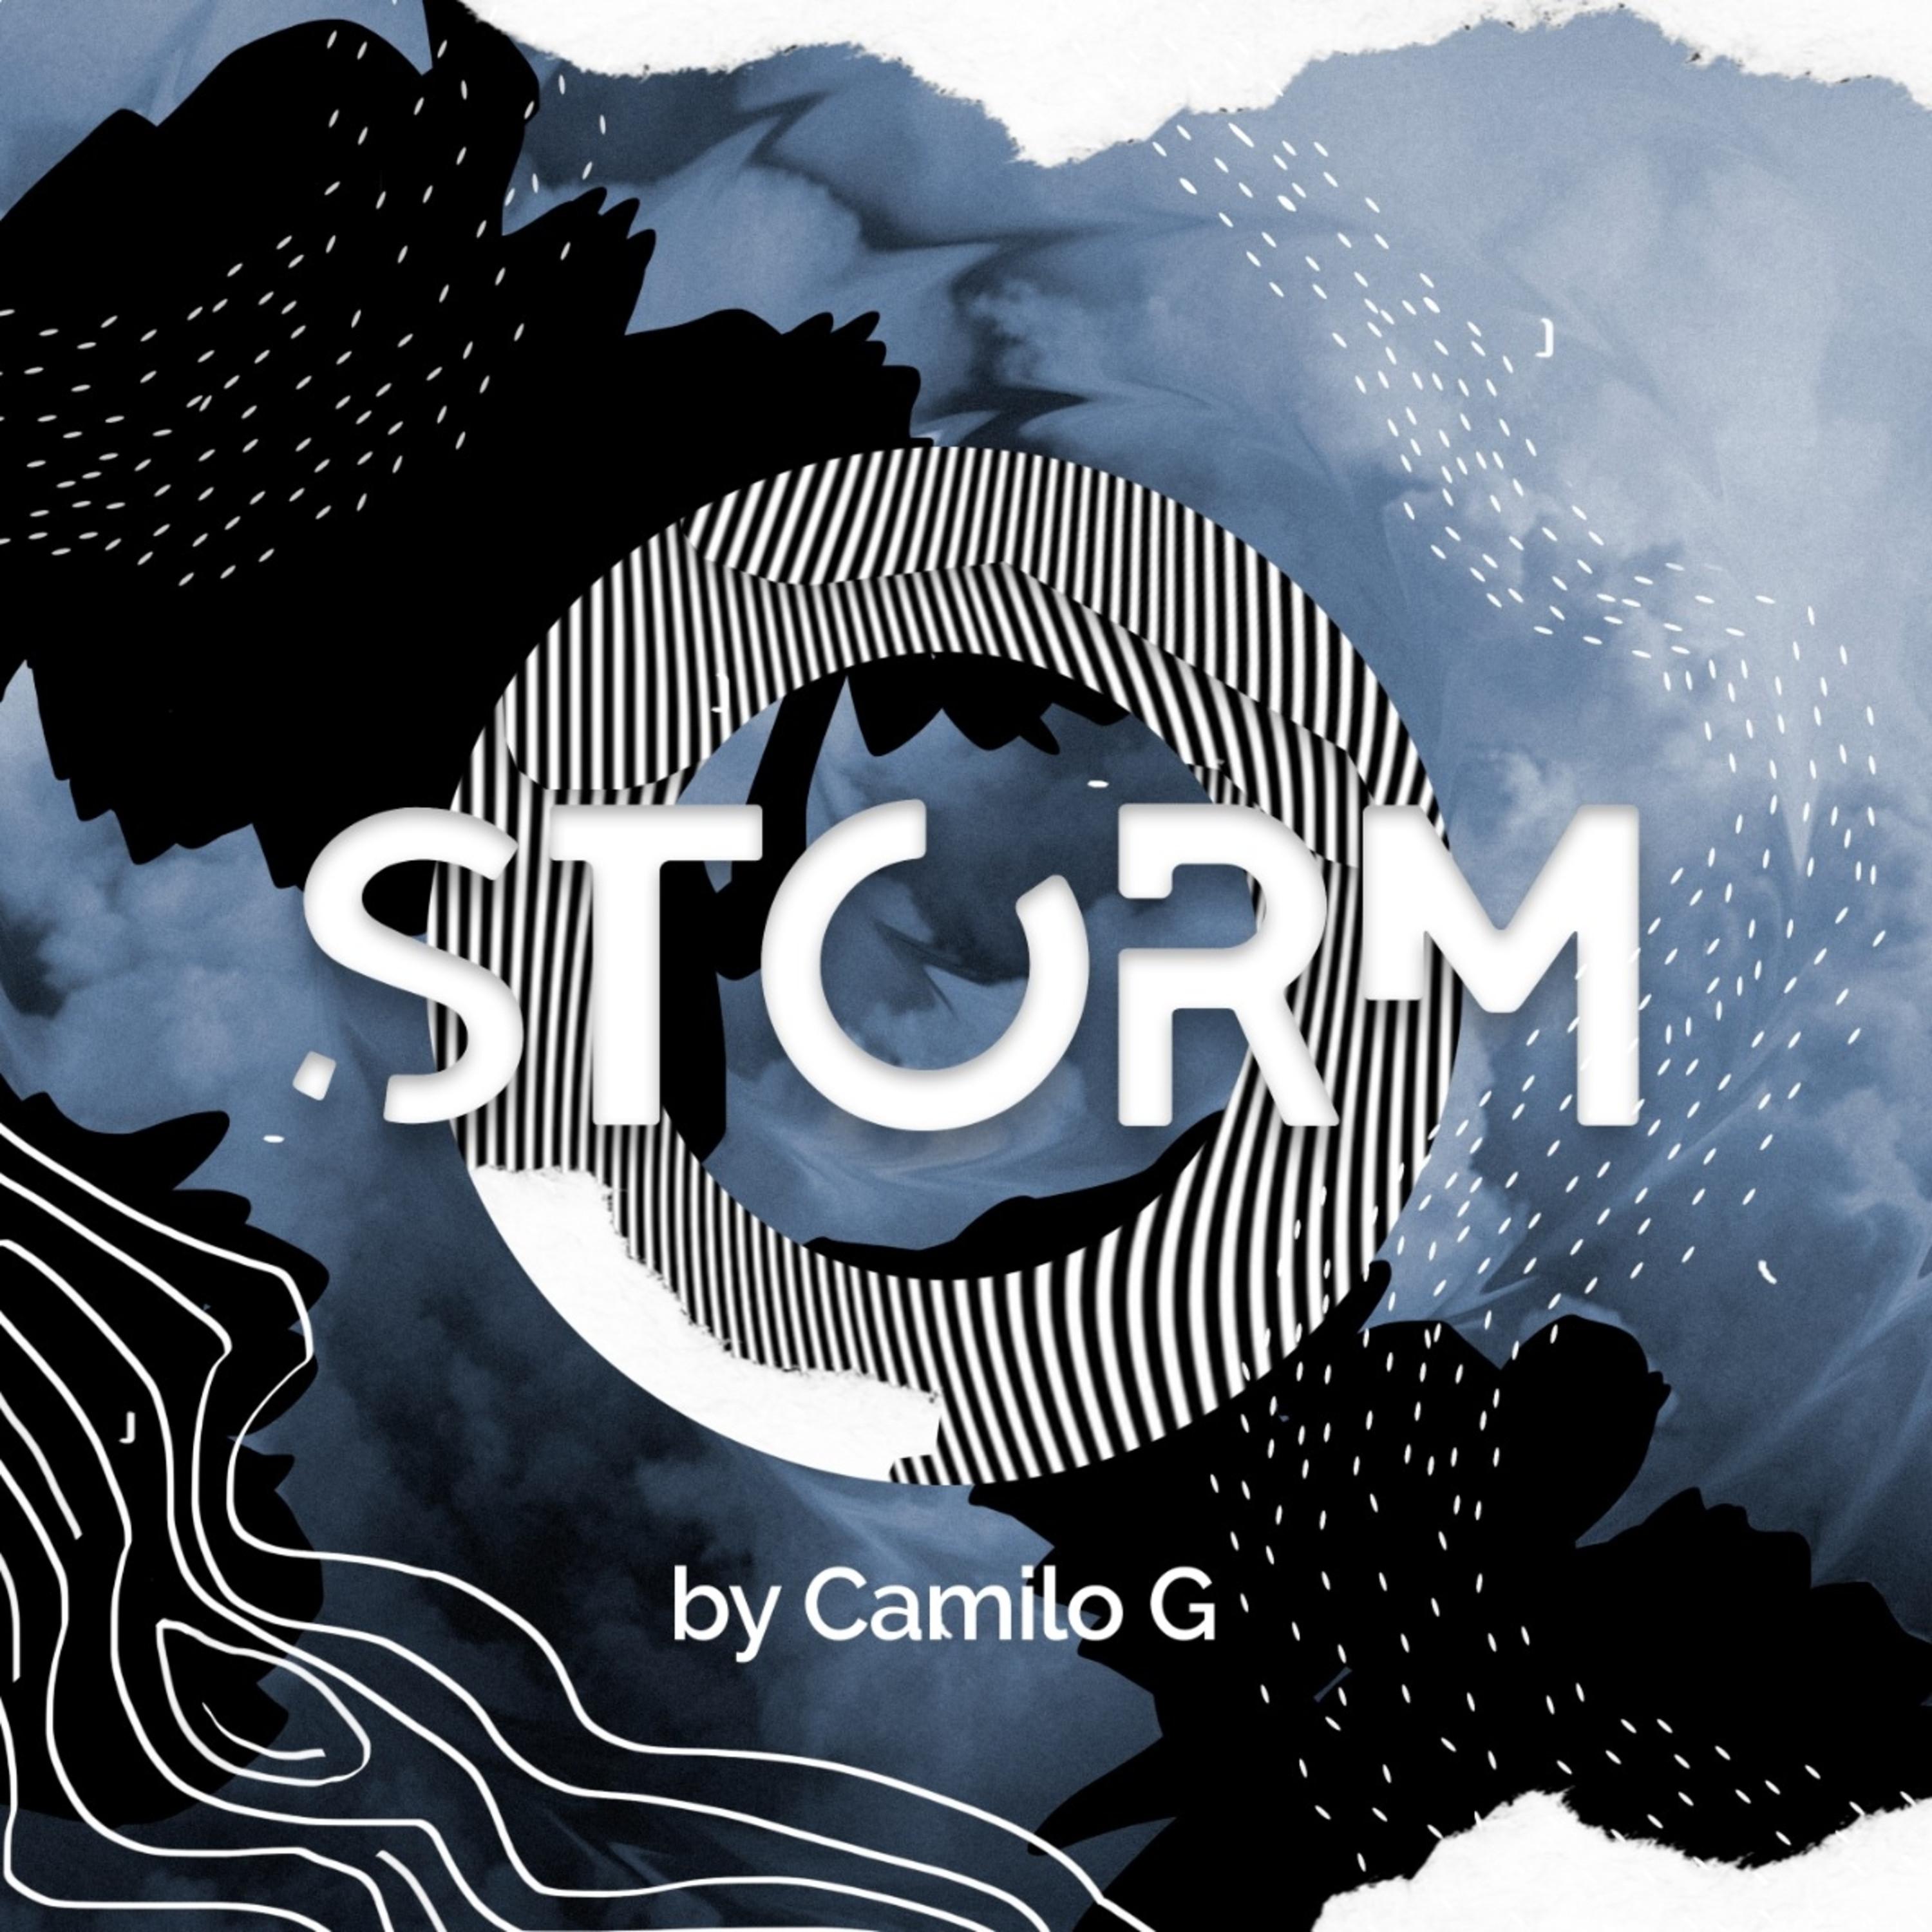 Camilo G - Before the Storm